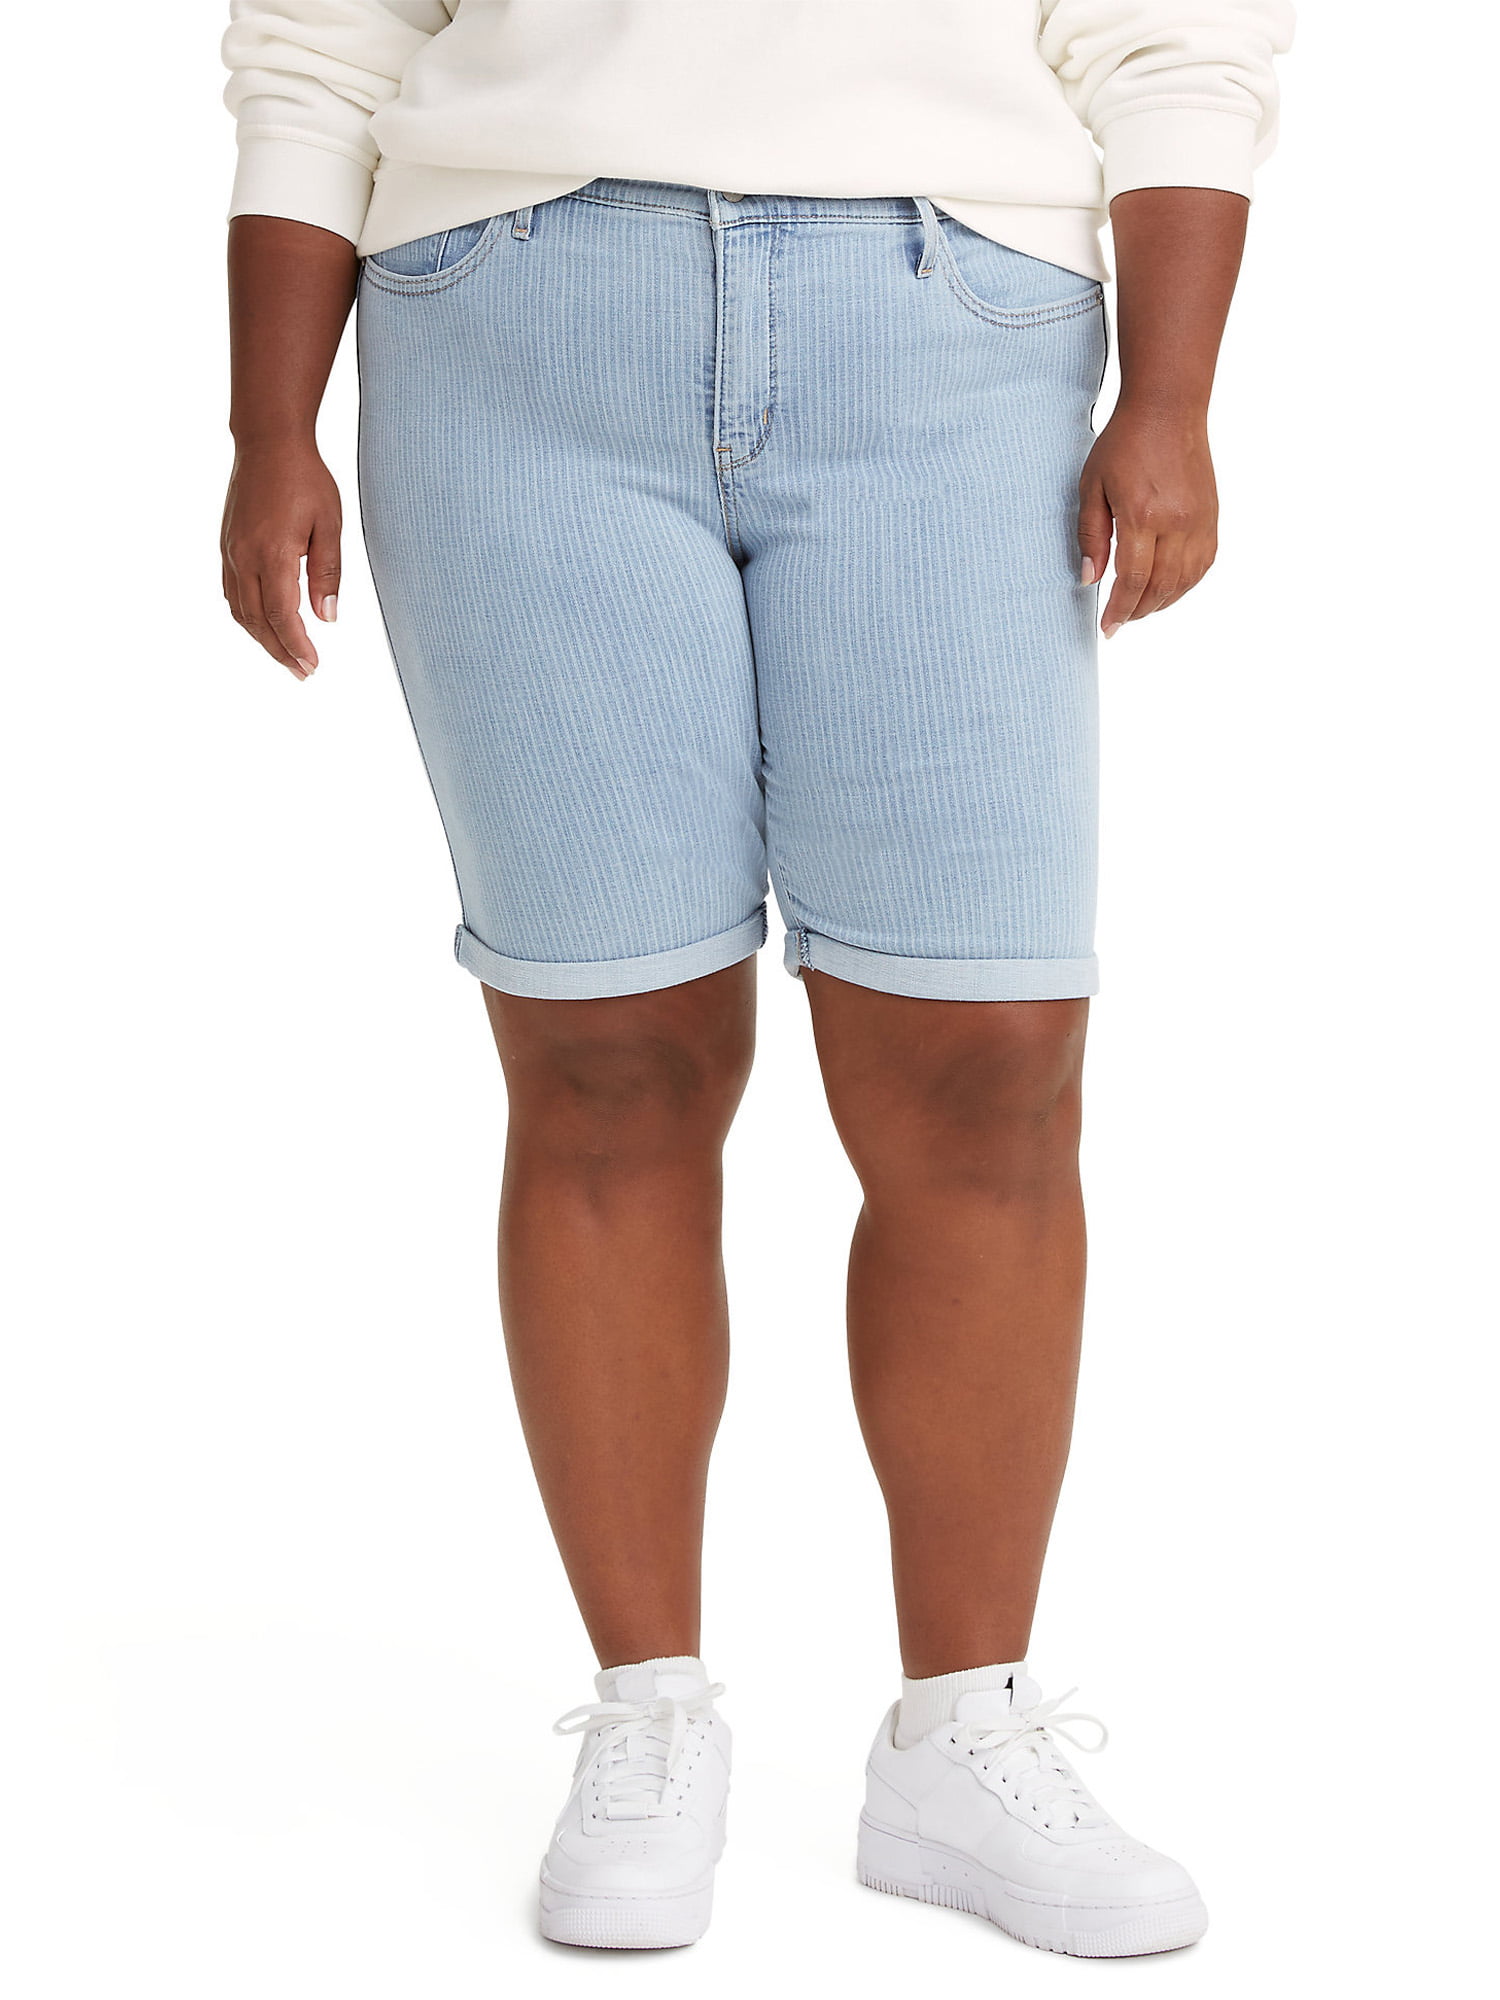 FIRERO Shorts for Women Plus Size Elastic Waist Solid Color Comfy Drawstring Casual Pocket Loose Bermuda Shorts Pants 